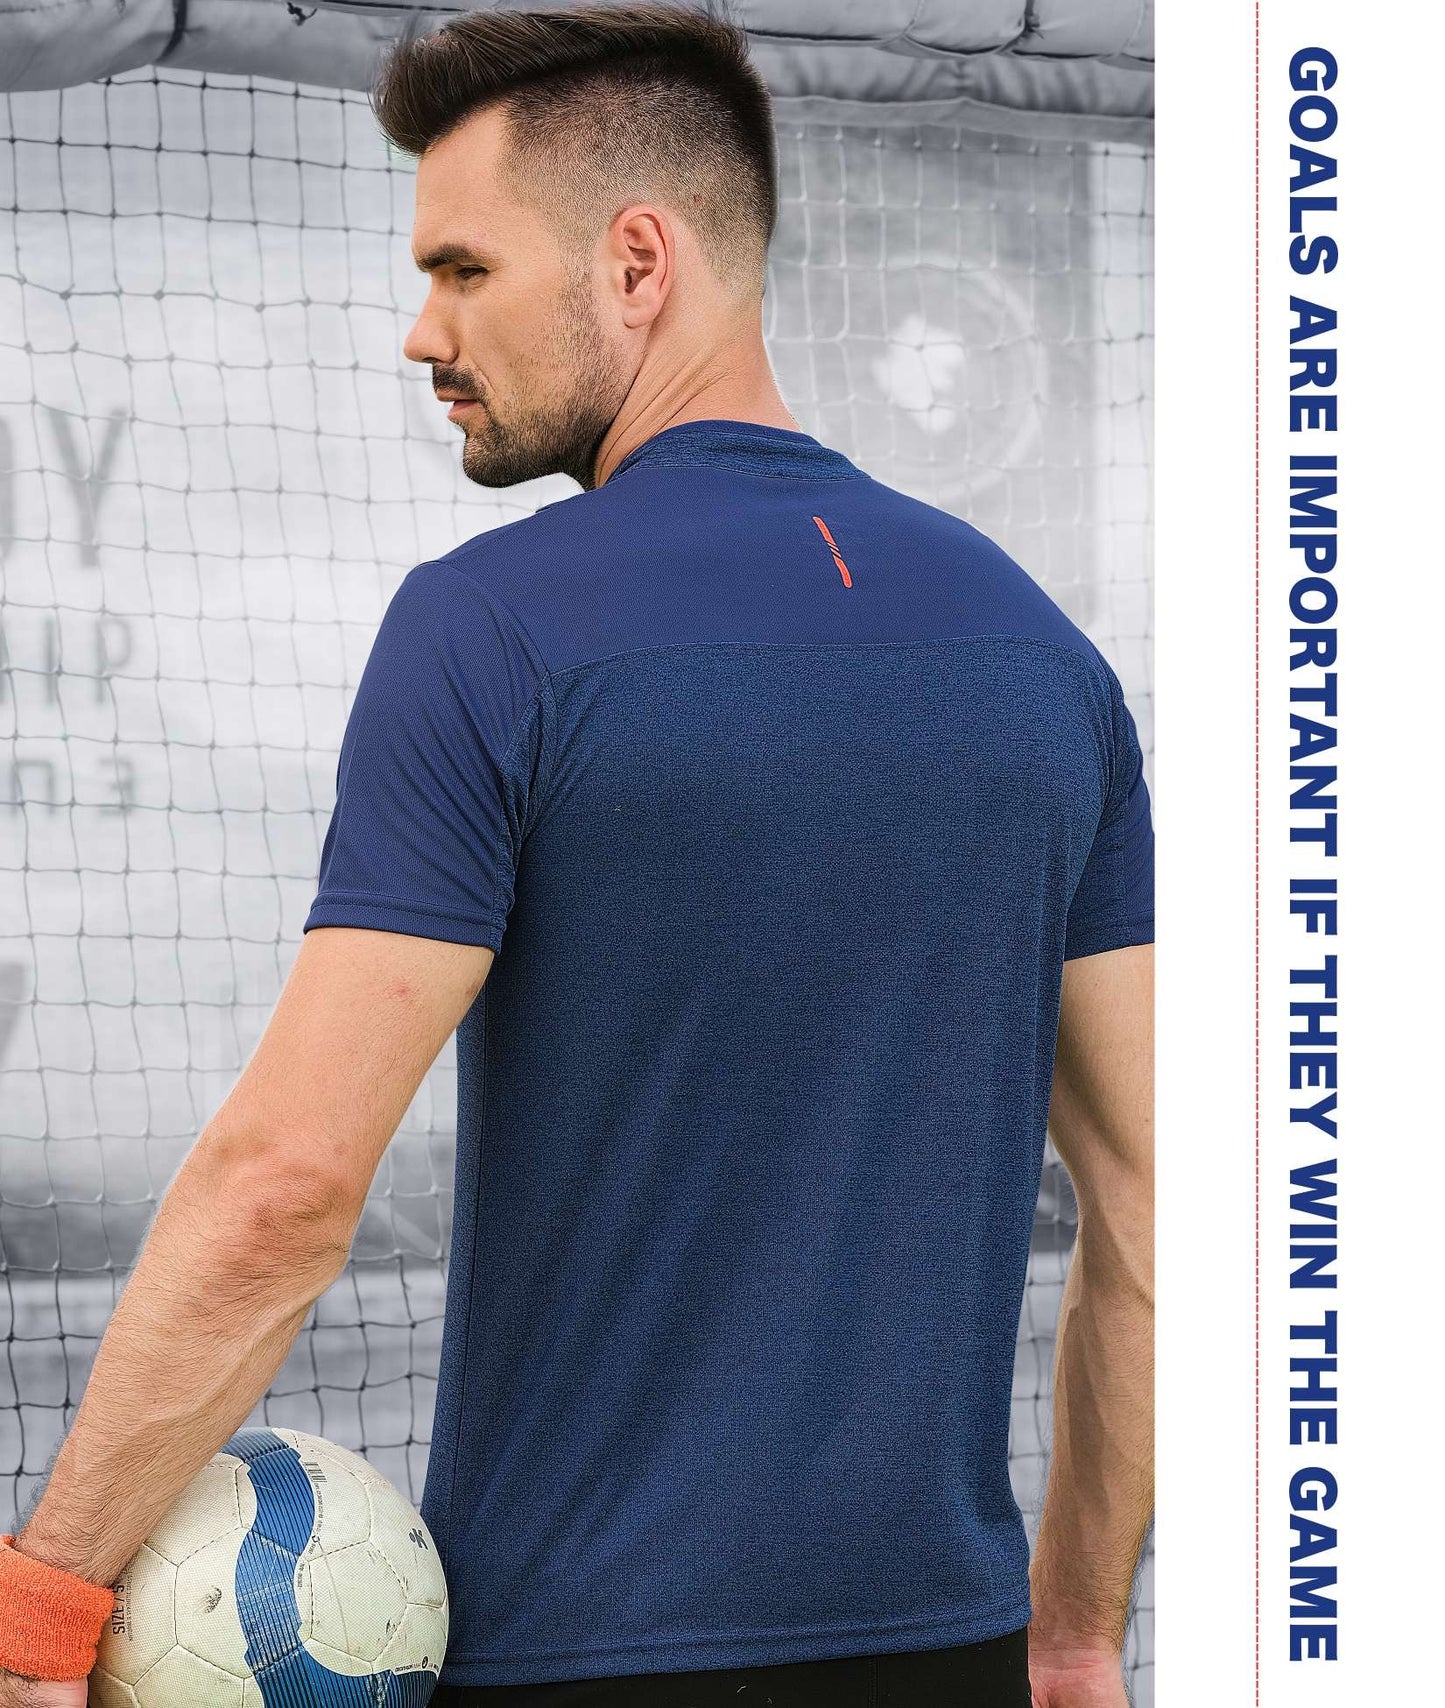 Technosport T Neck Half Zip Half Sleeve Dry Fit T Shirt for Men P 512 Royal Blue